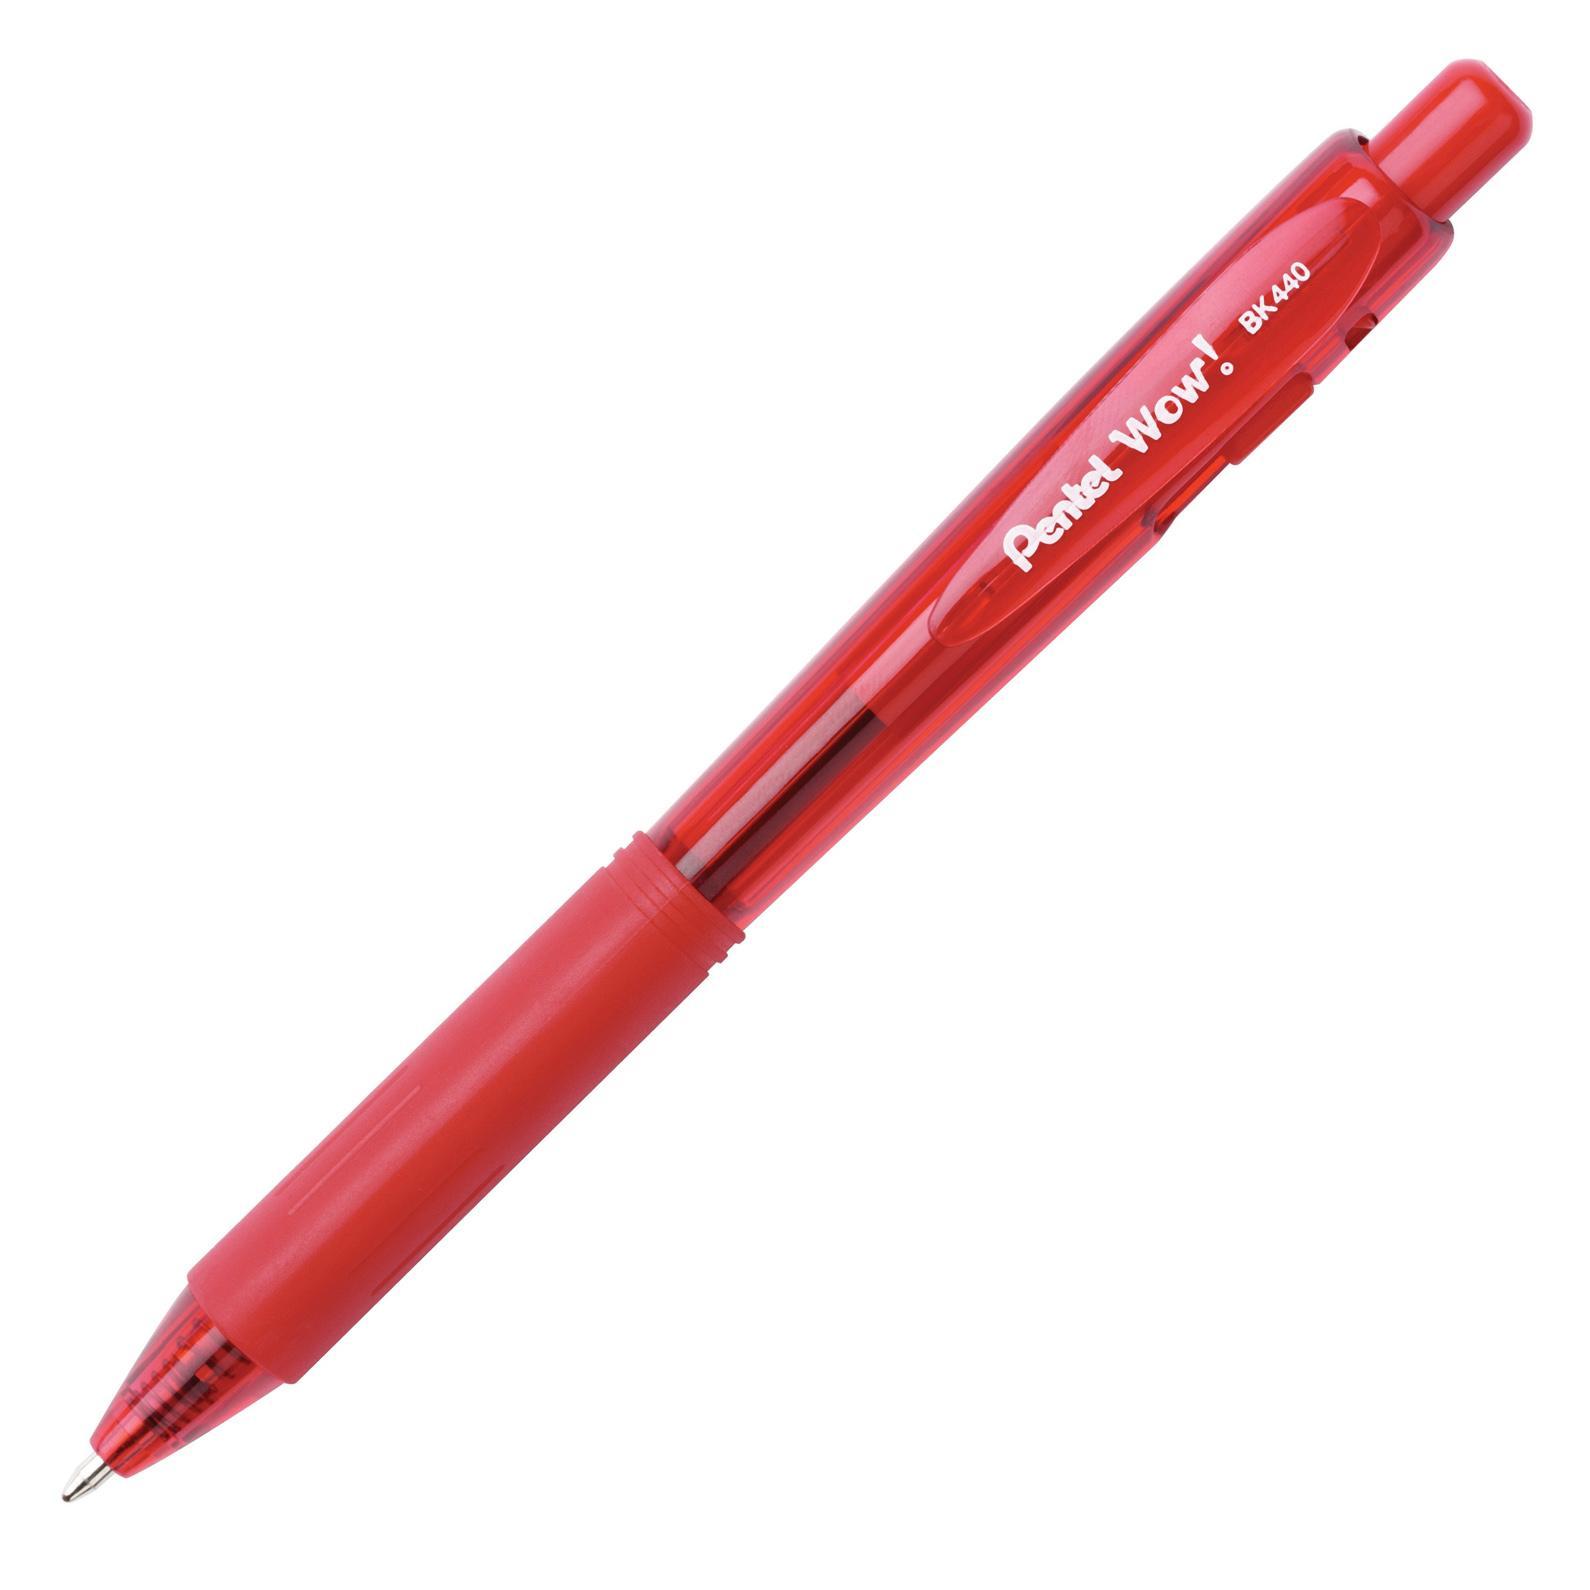 Am the pens red. Шариковая ручка Pentel. Ручка шариковая Trion Grip RT 1,0мм (ср/кр) claro. Шариковая ручка Neon Belpoint Pen 07 Headber. Ручка шариковая Trento красный.